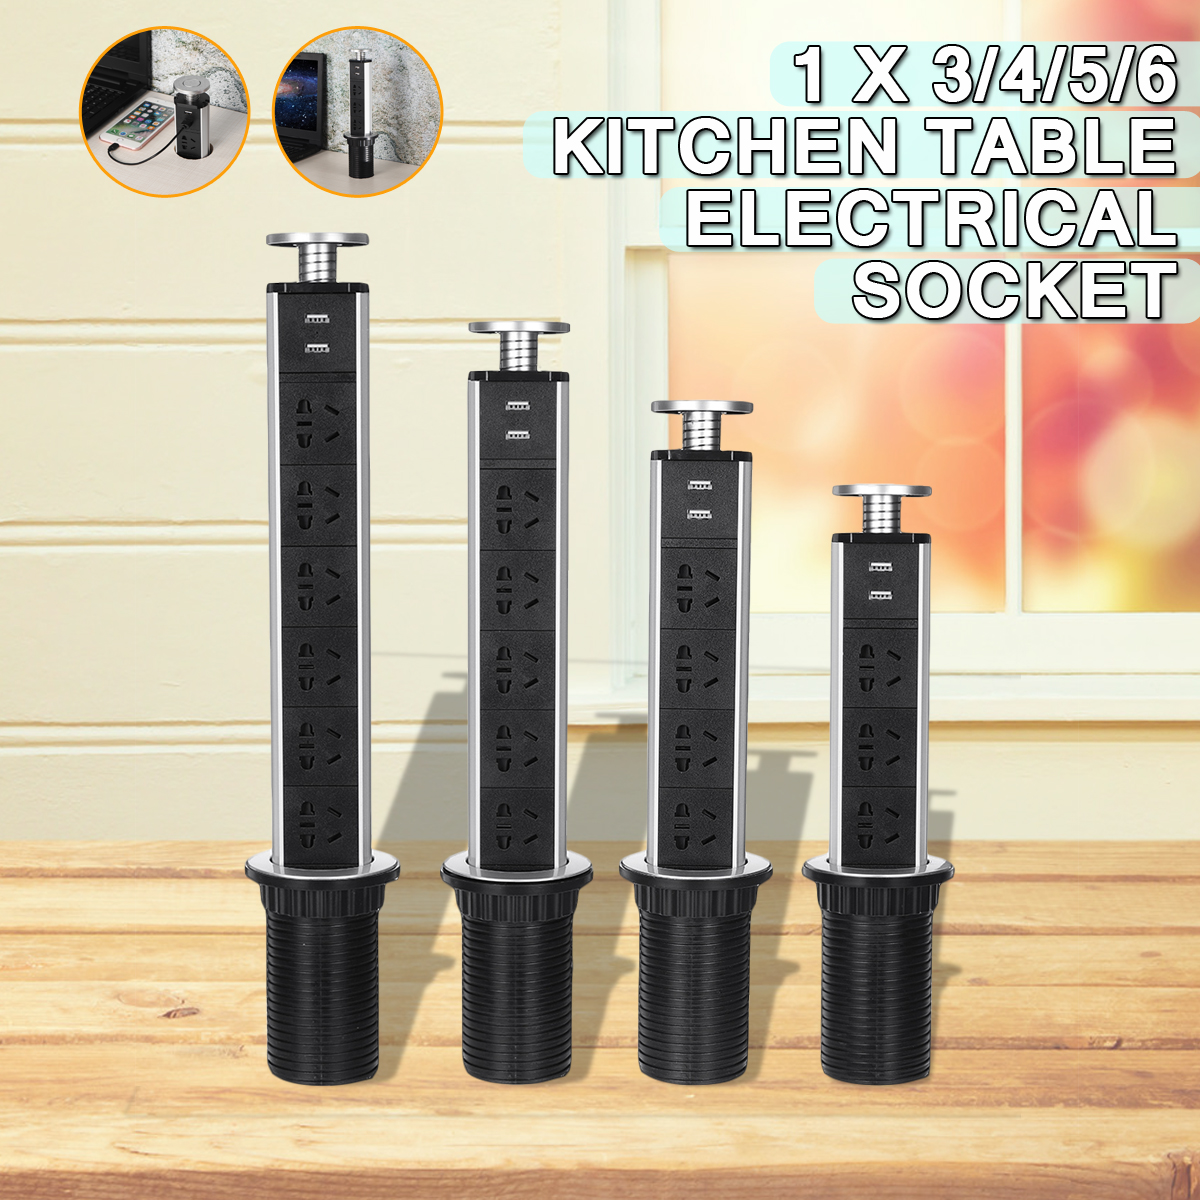 Electrical-Socket-Power-Hidden-Kitchen-Table-USB-Charger-Aluminum-Shelf-1567170-1